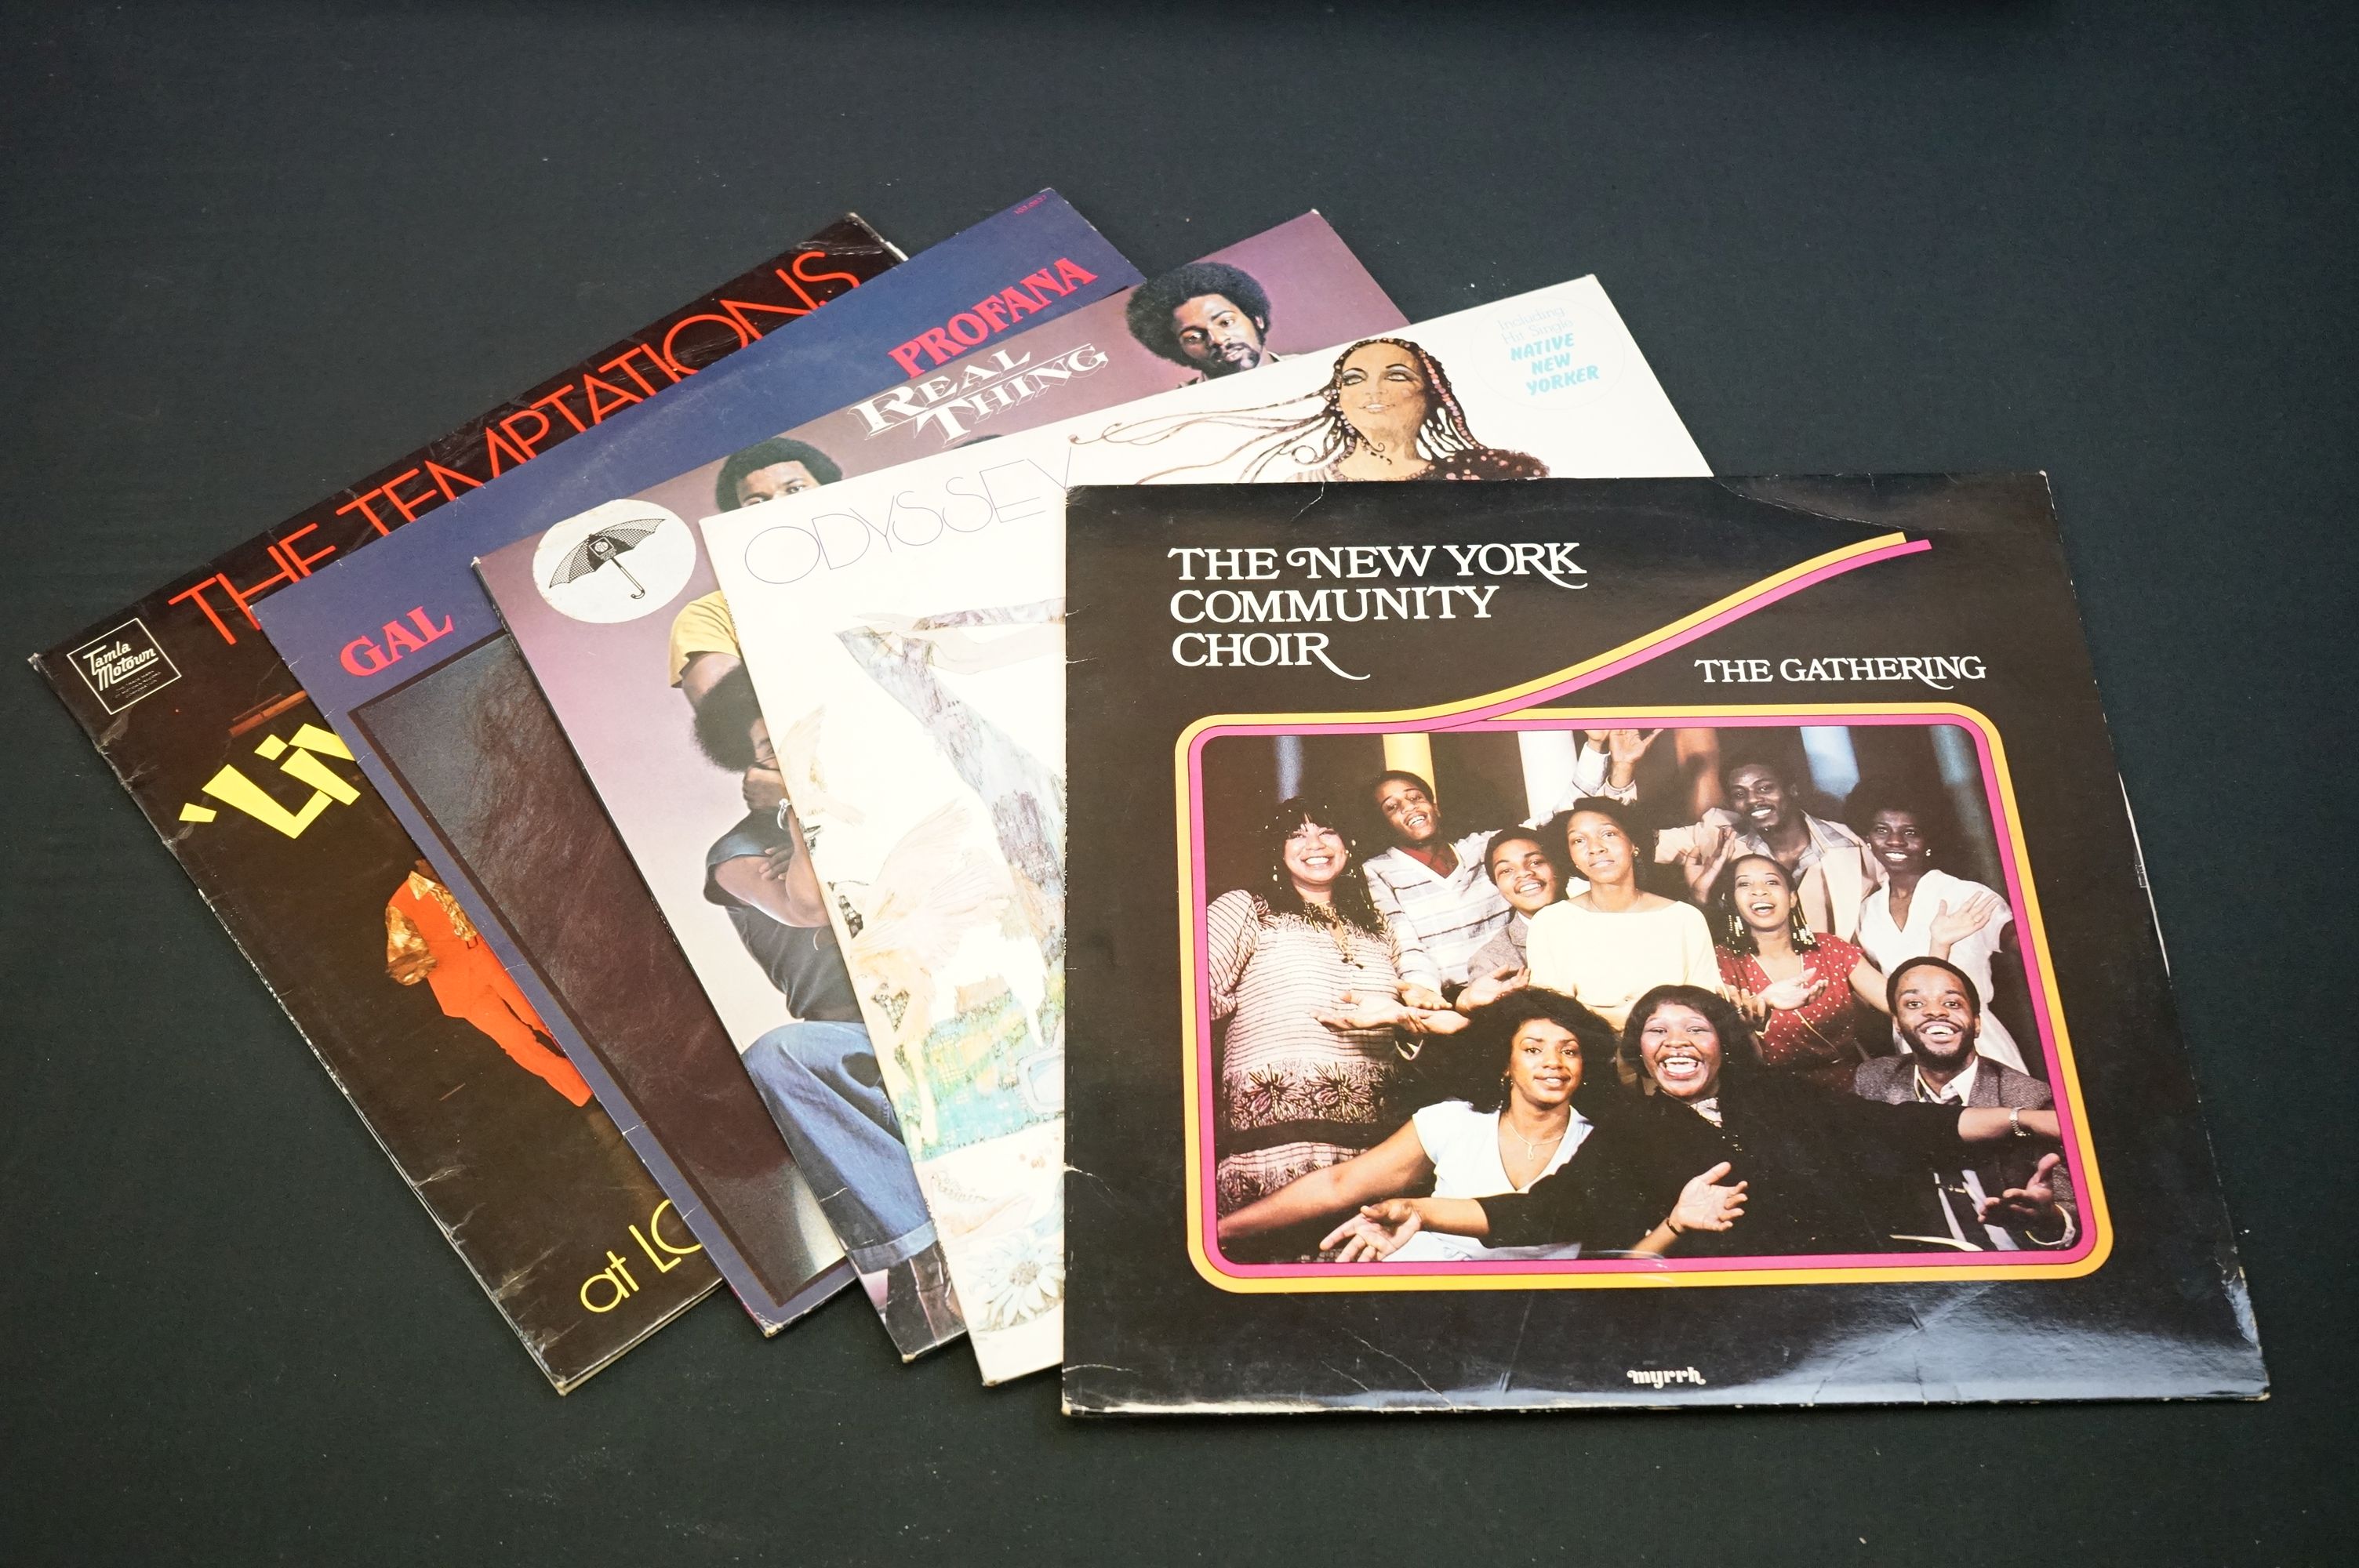 Vinyl - Over 100 soul / funk / disco LPs incluindg Stevie Wonder, Donny Hathaway, The New York - Image 2 of 5